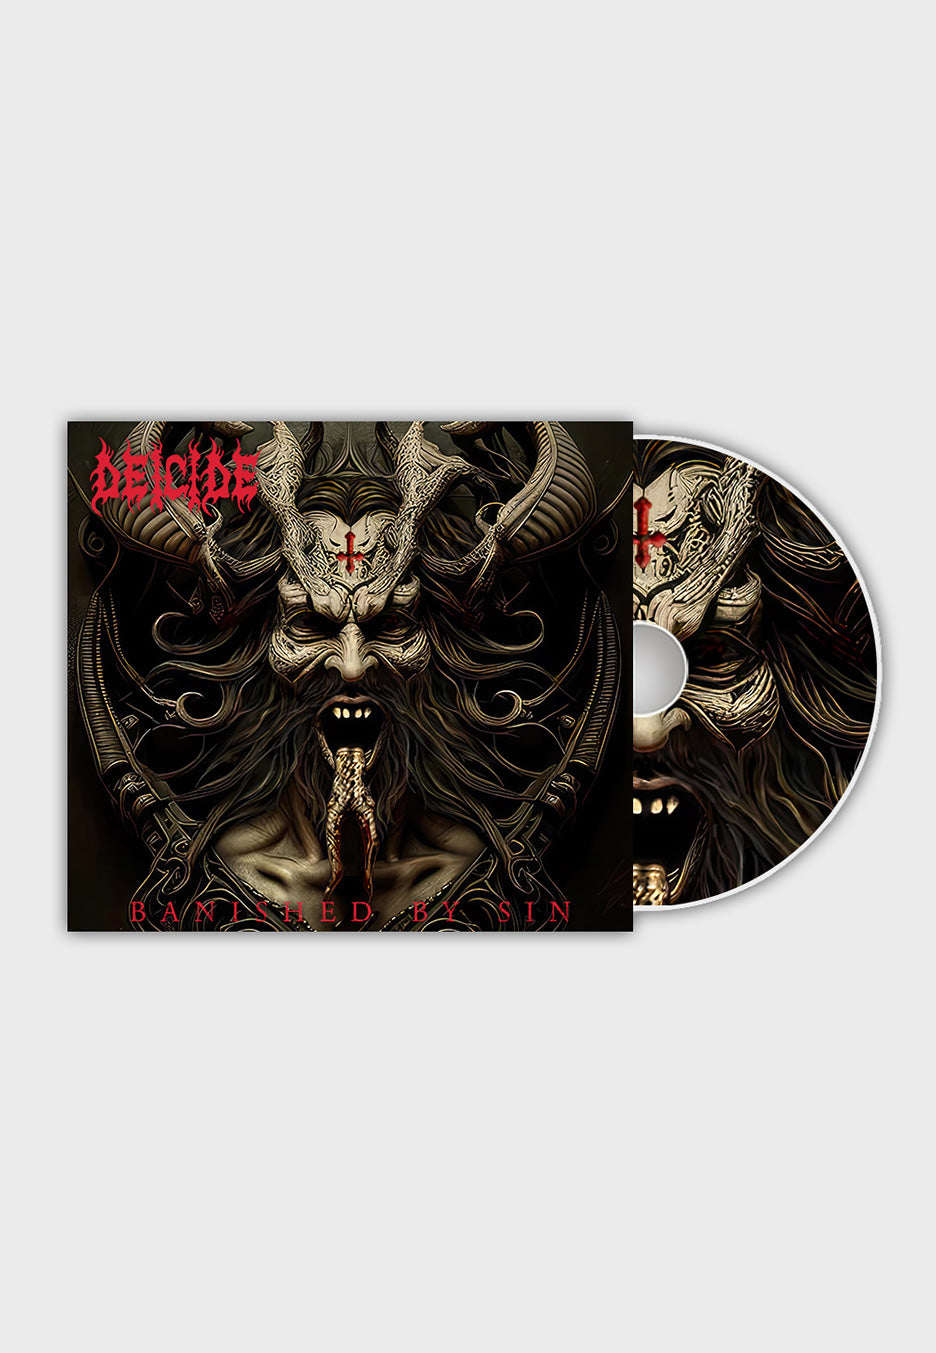 Deicide - Banished By Sin - Digipak CD